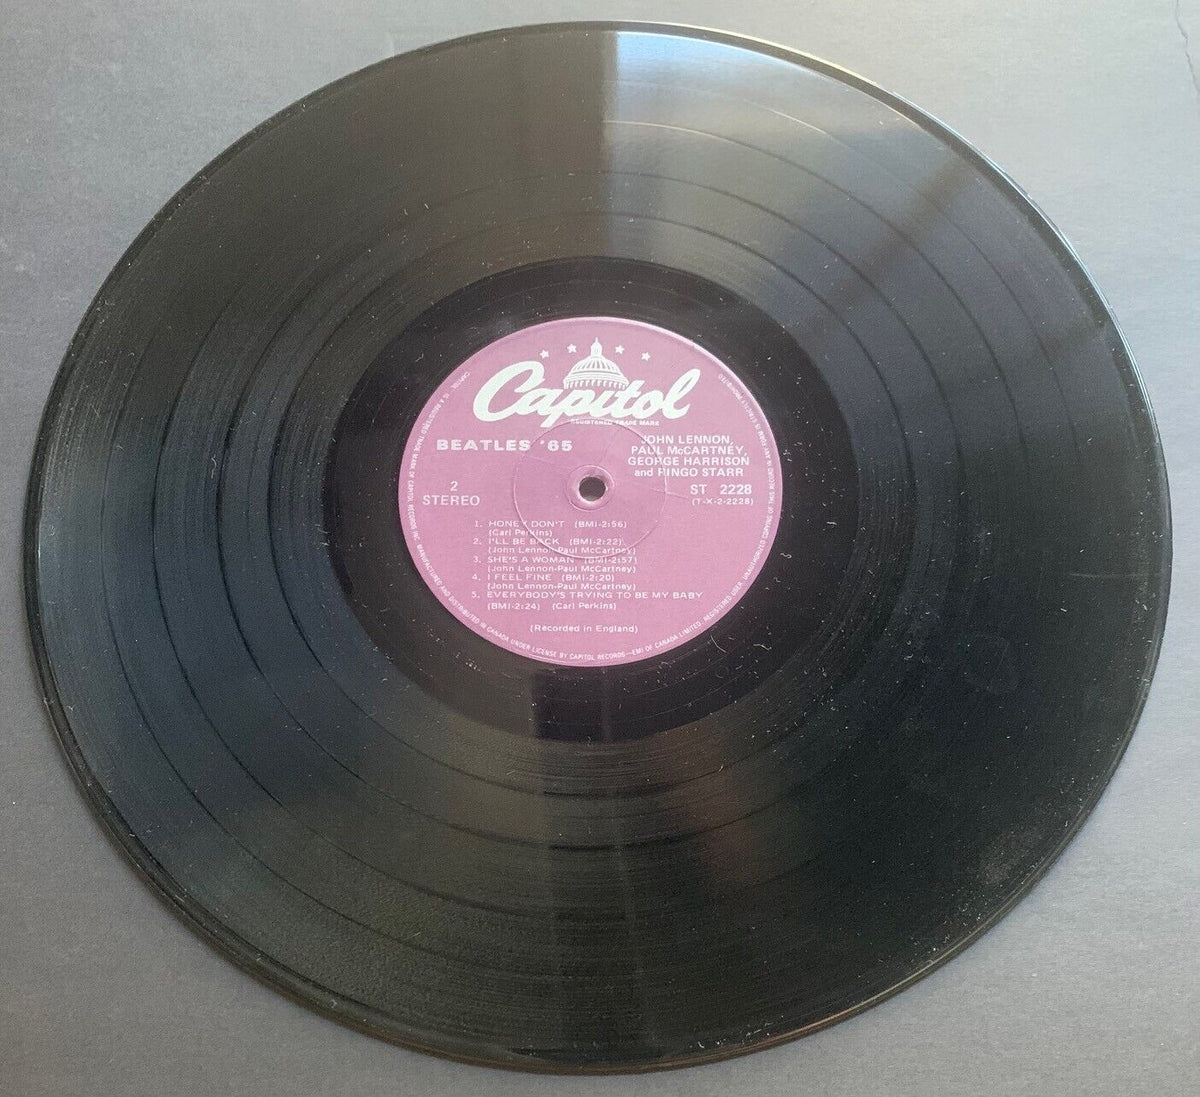 1964 The Beatles Album Long Tall Sally Capital Records Original